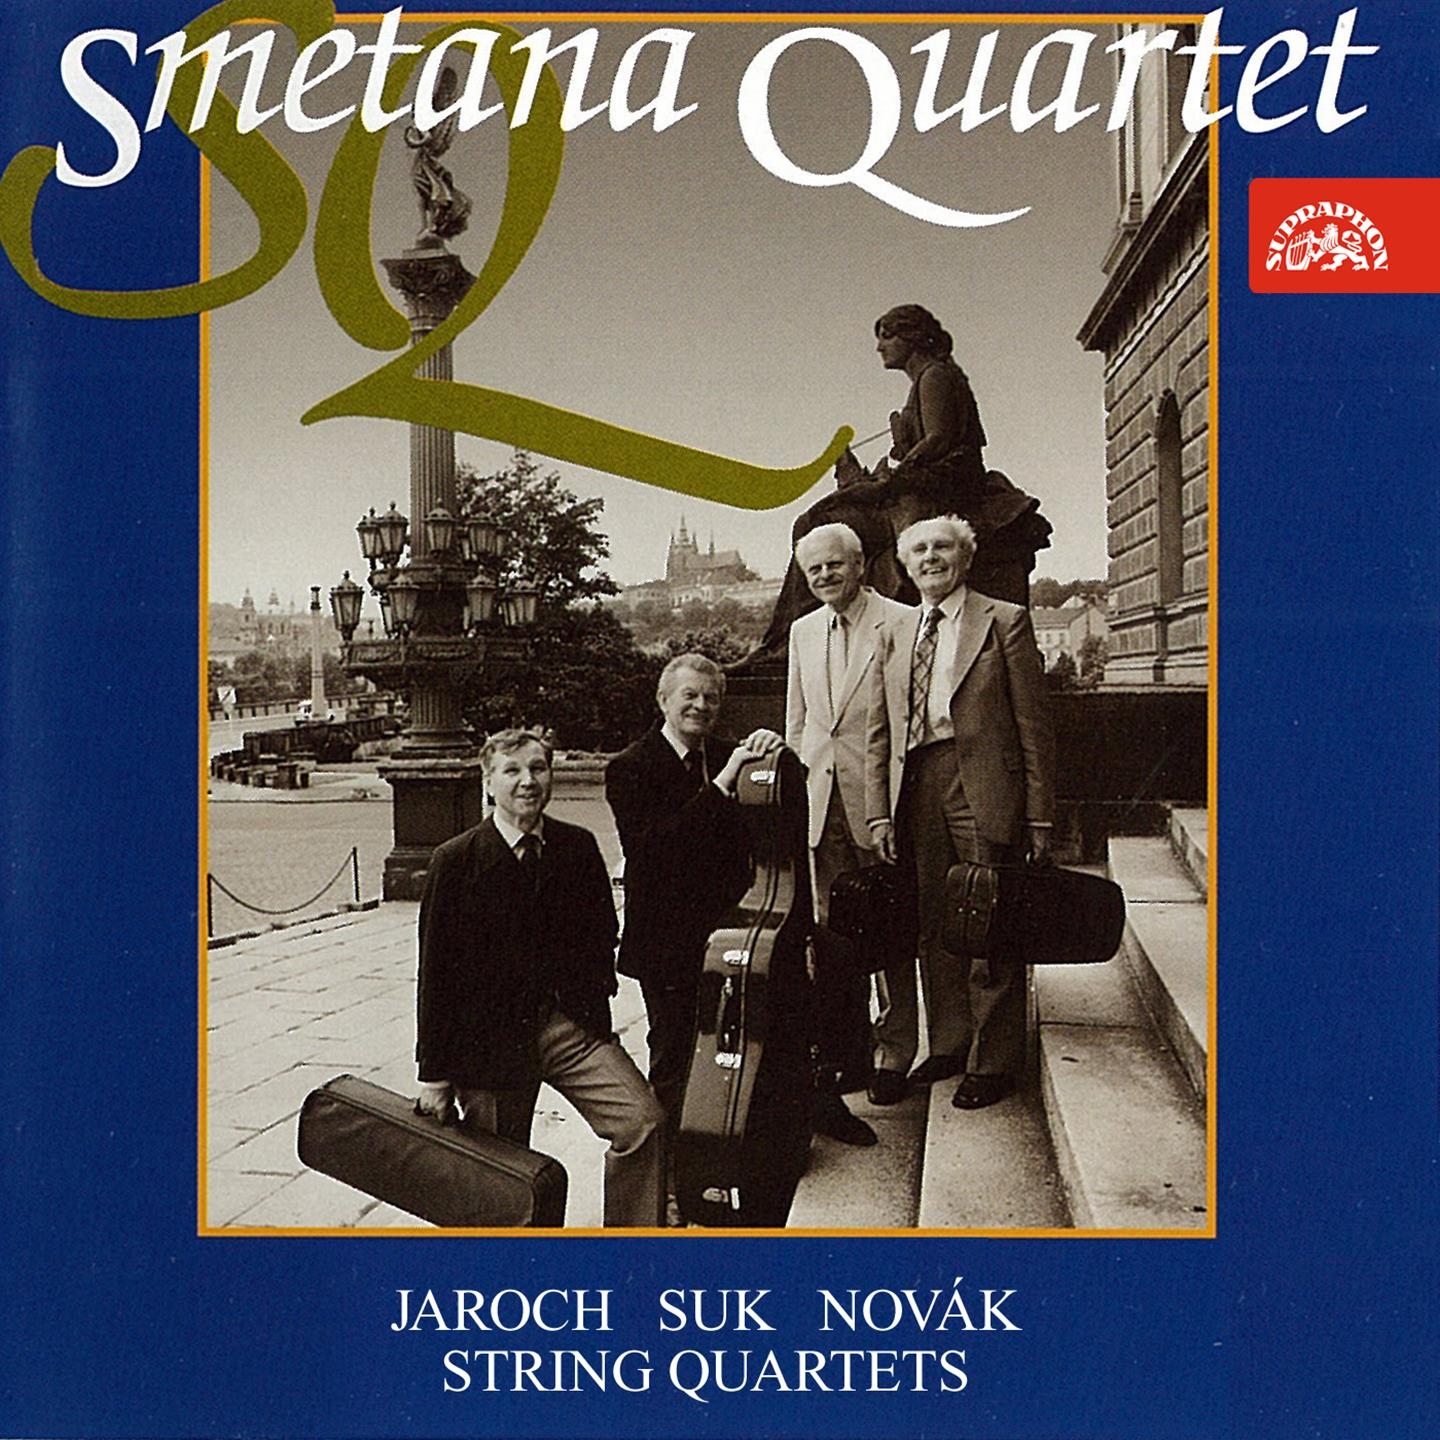 Jaroch, Suk, Nova k: String Quartets